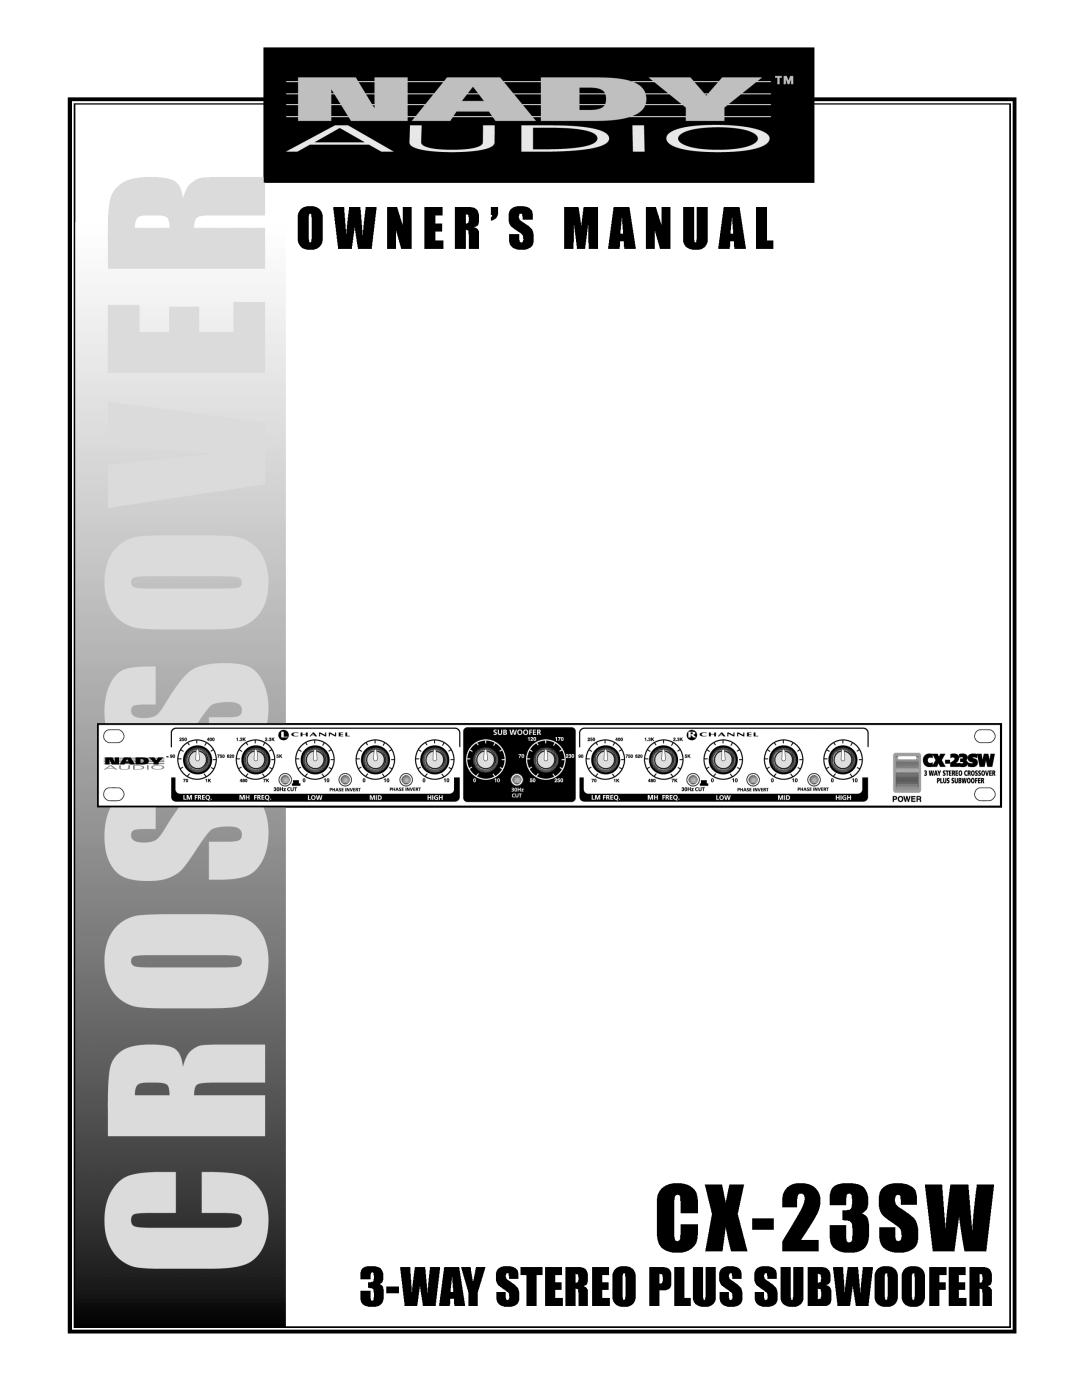 Nady Systems CX-23SW owner manual Revossor, O W N E R ’ S M A N U A L, Waystereo Plus Subwoofer 